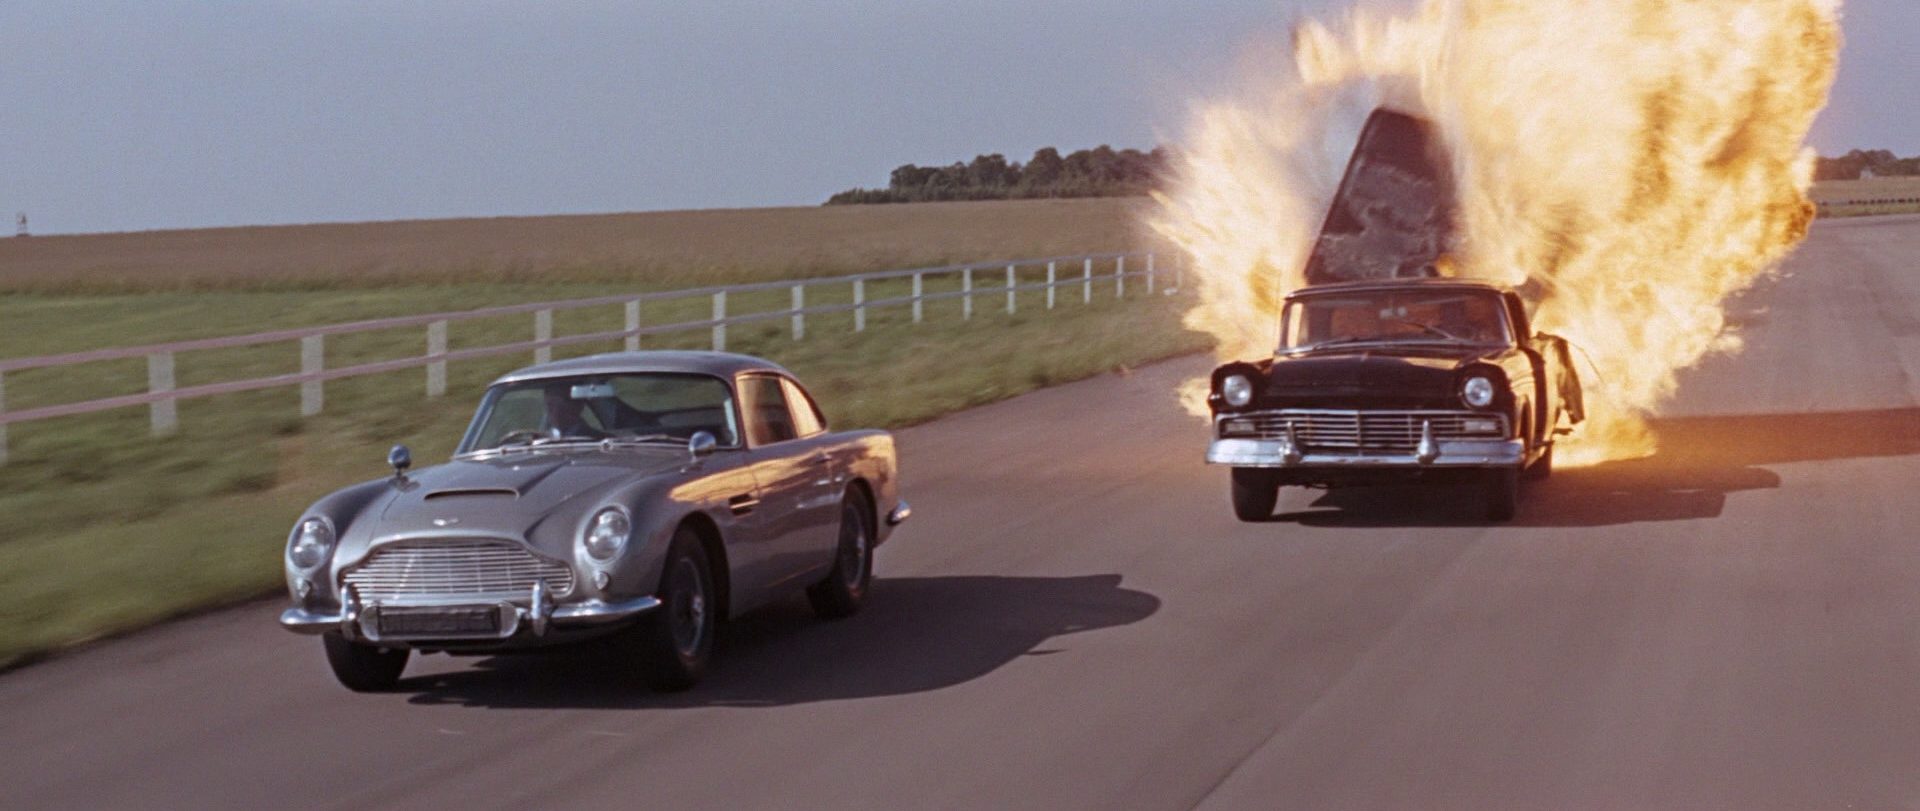 Filmszene aus James Bond 007 - Feuerball